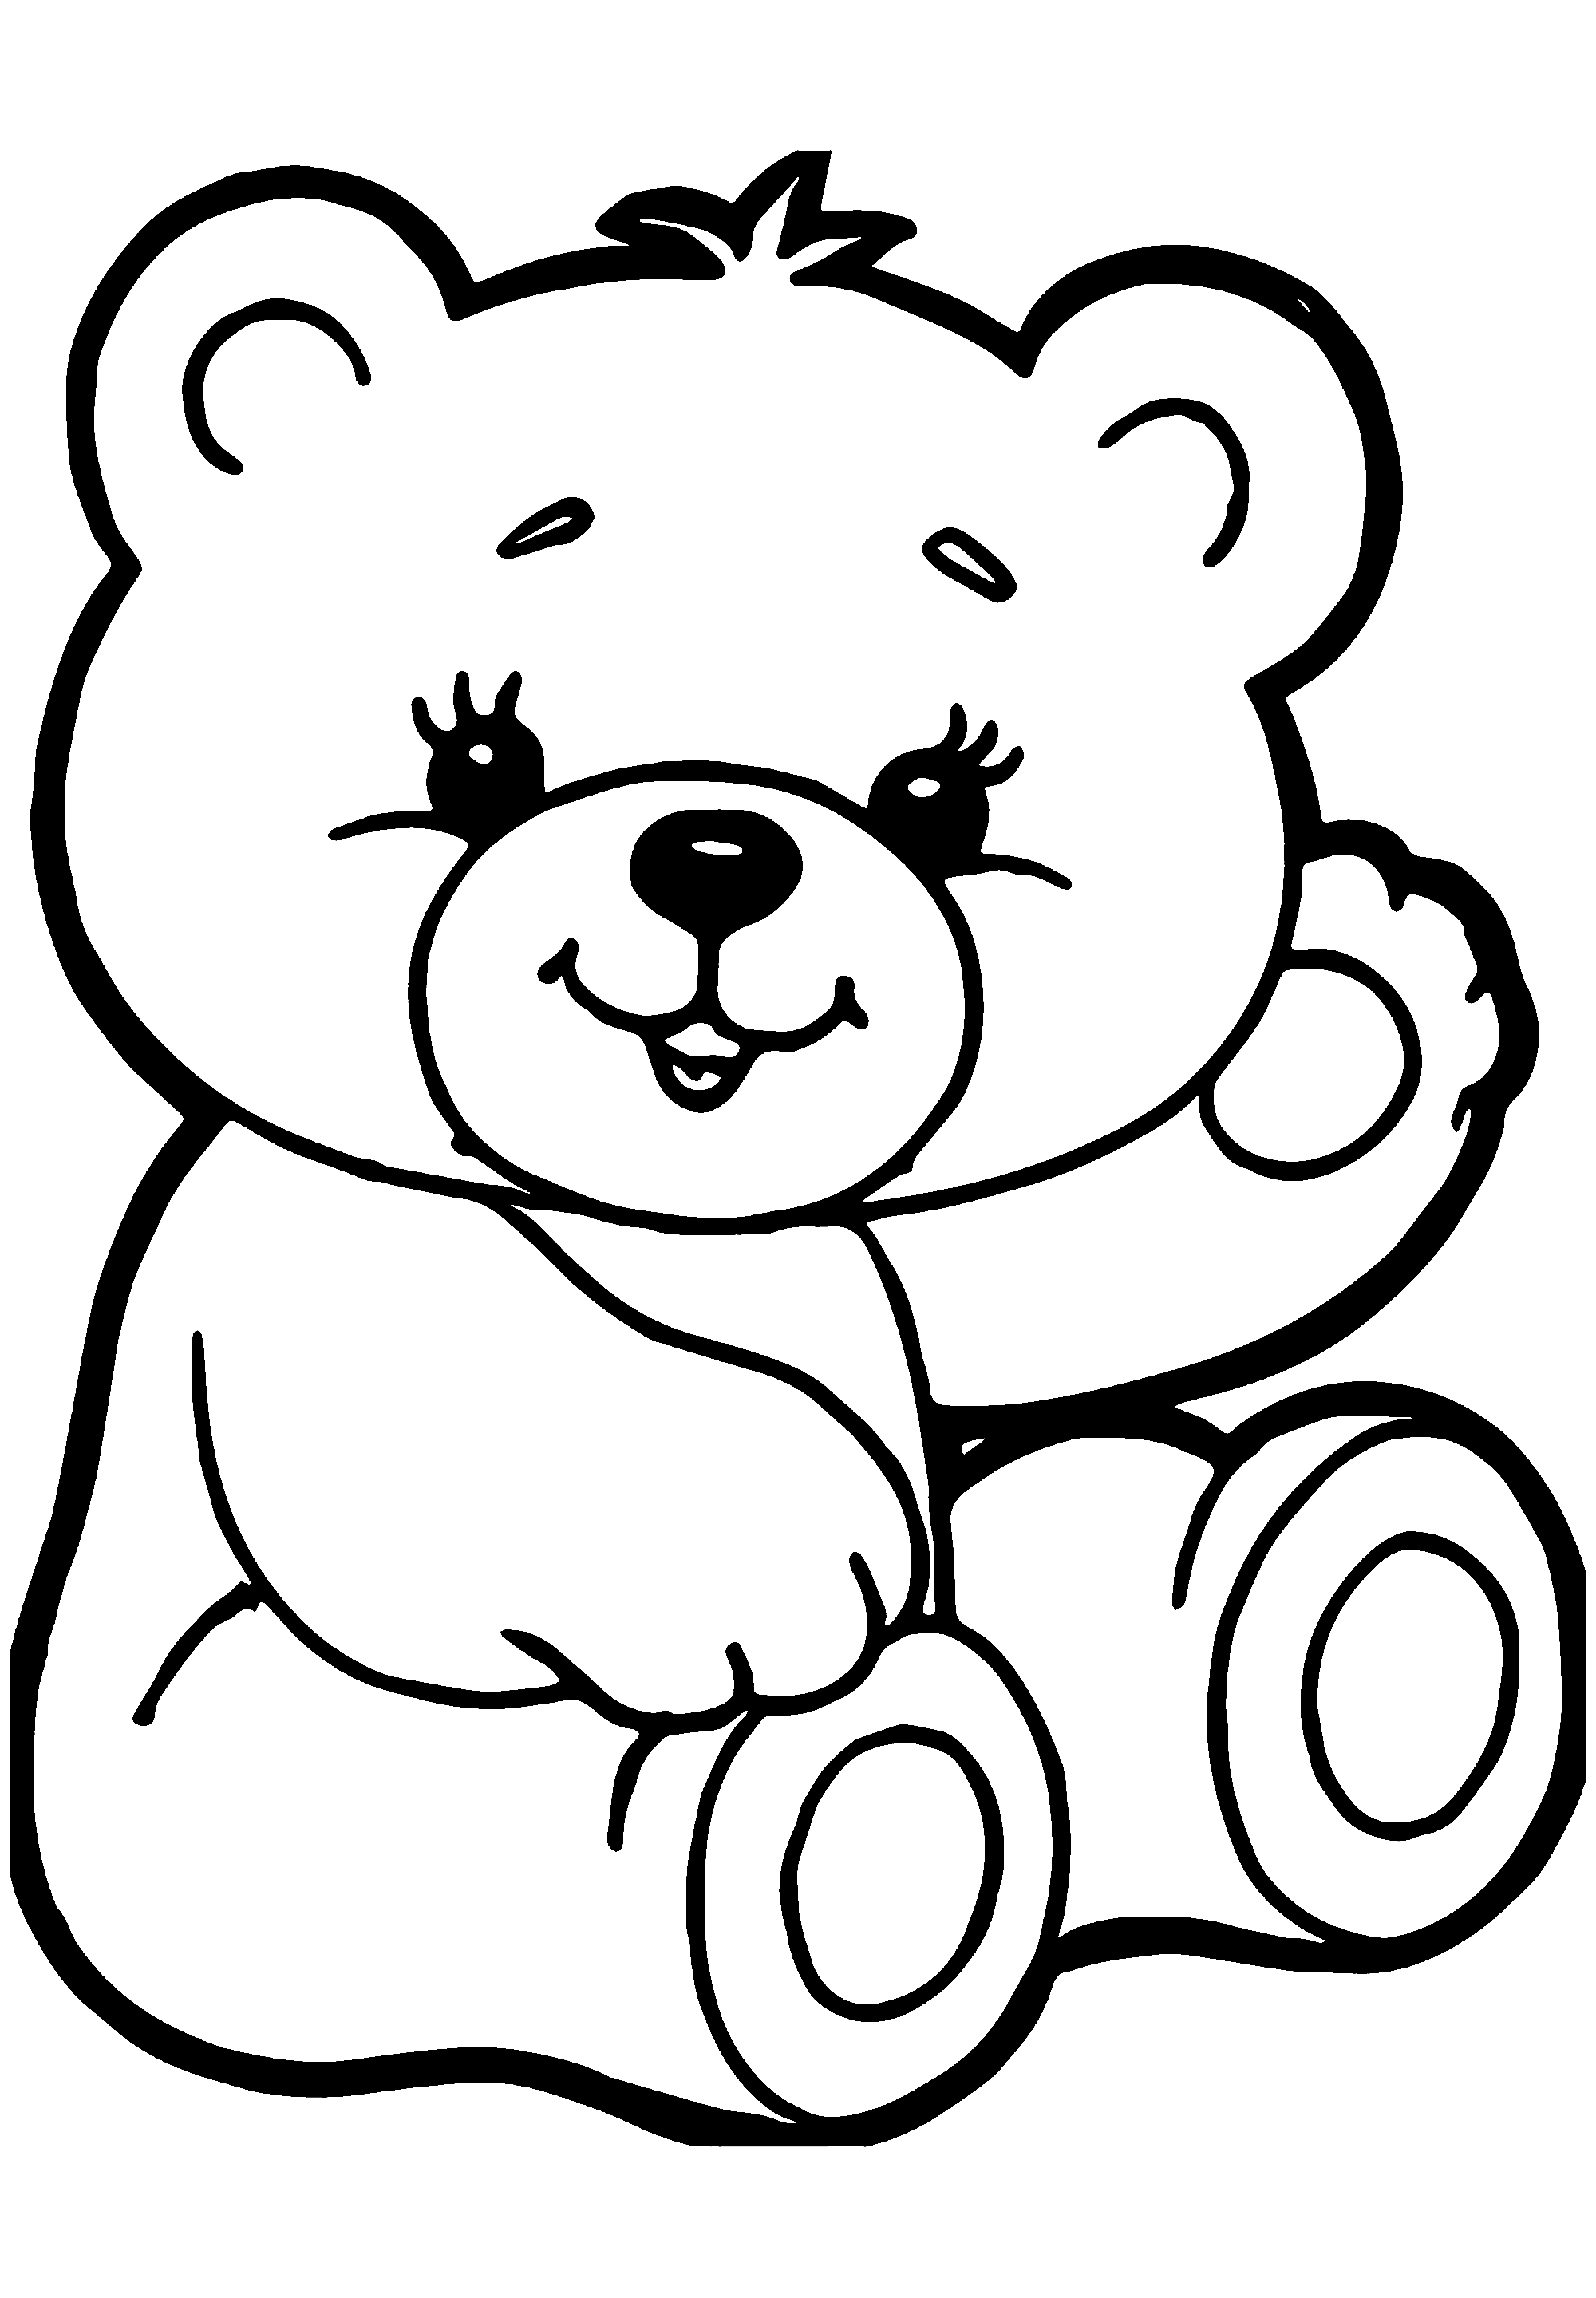 Printable Teddy Bear Coloring Page